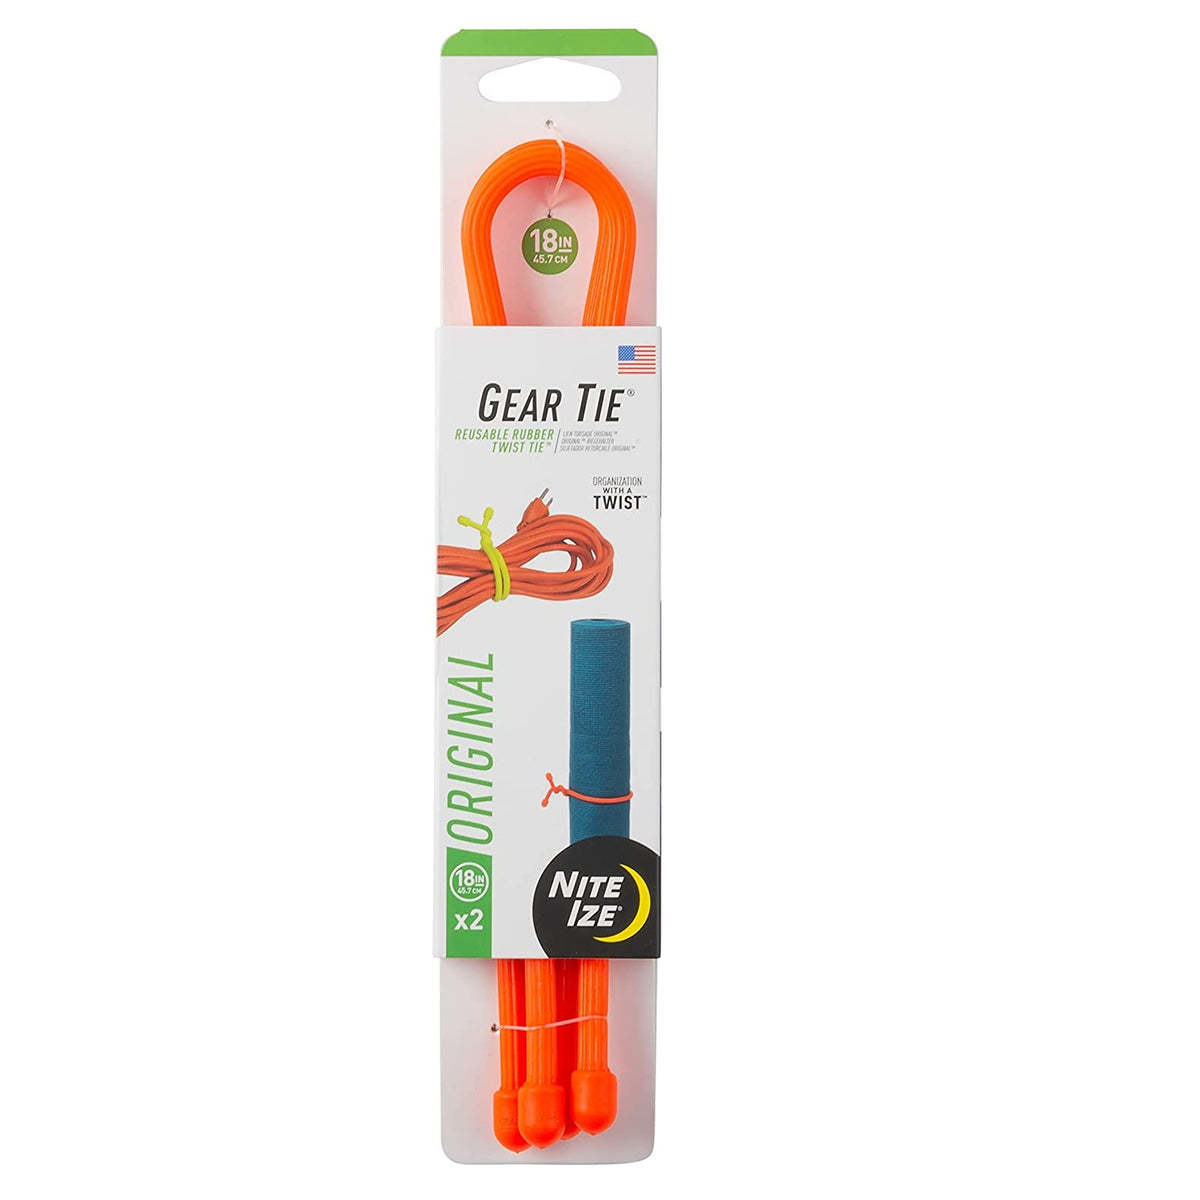 Nite Ize GT12-31-2R3 Gear Tie Reusable Twist Tie, Bright Orange